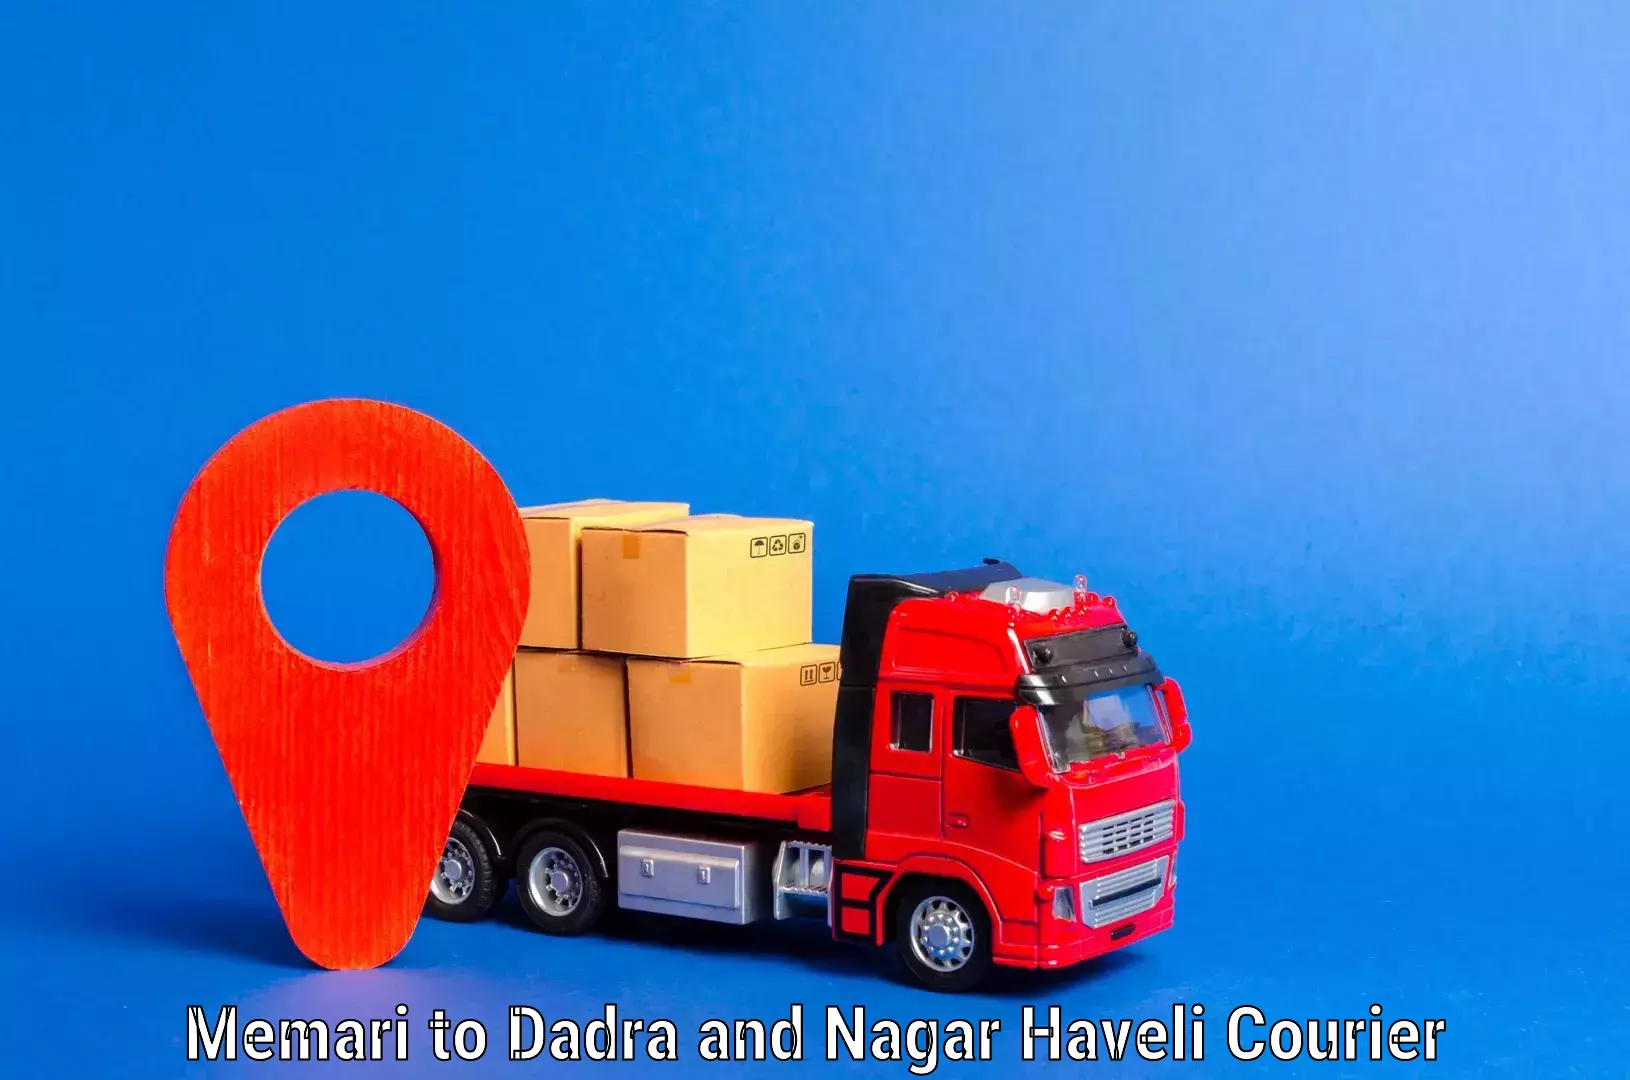 Professional moving company Memari to Dadra and Nagar Haveli